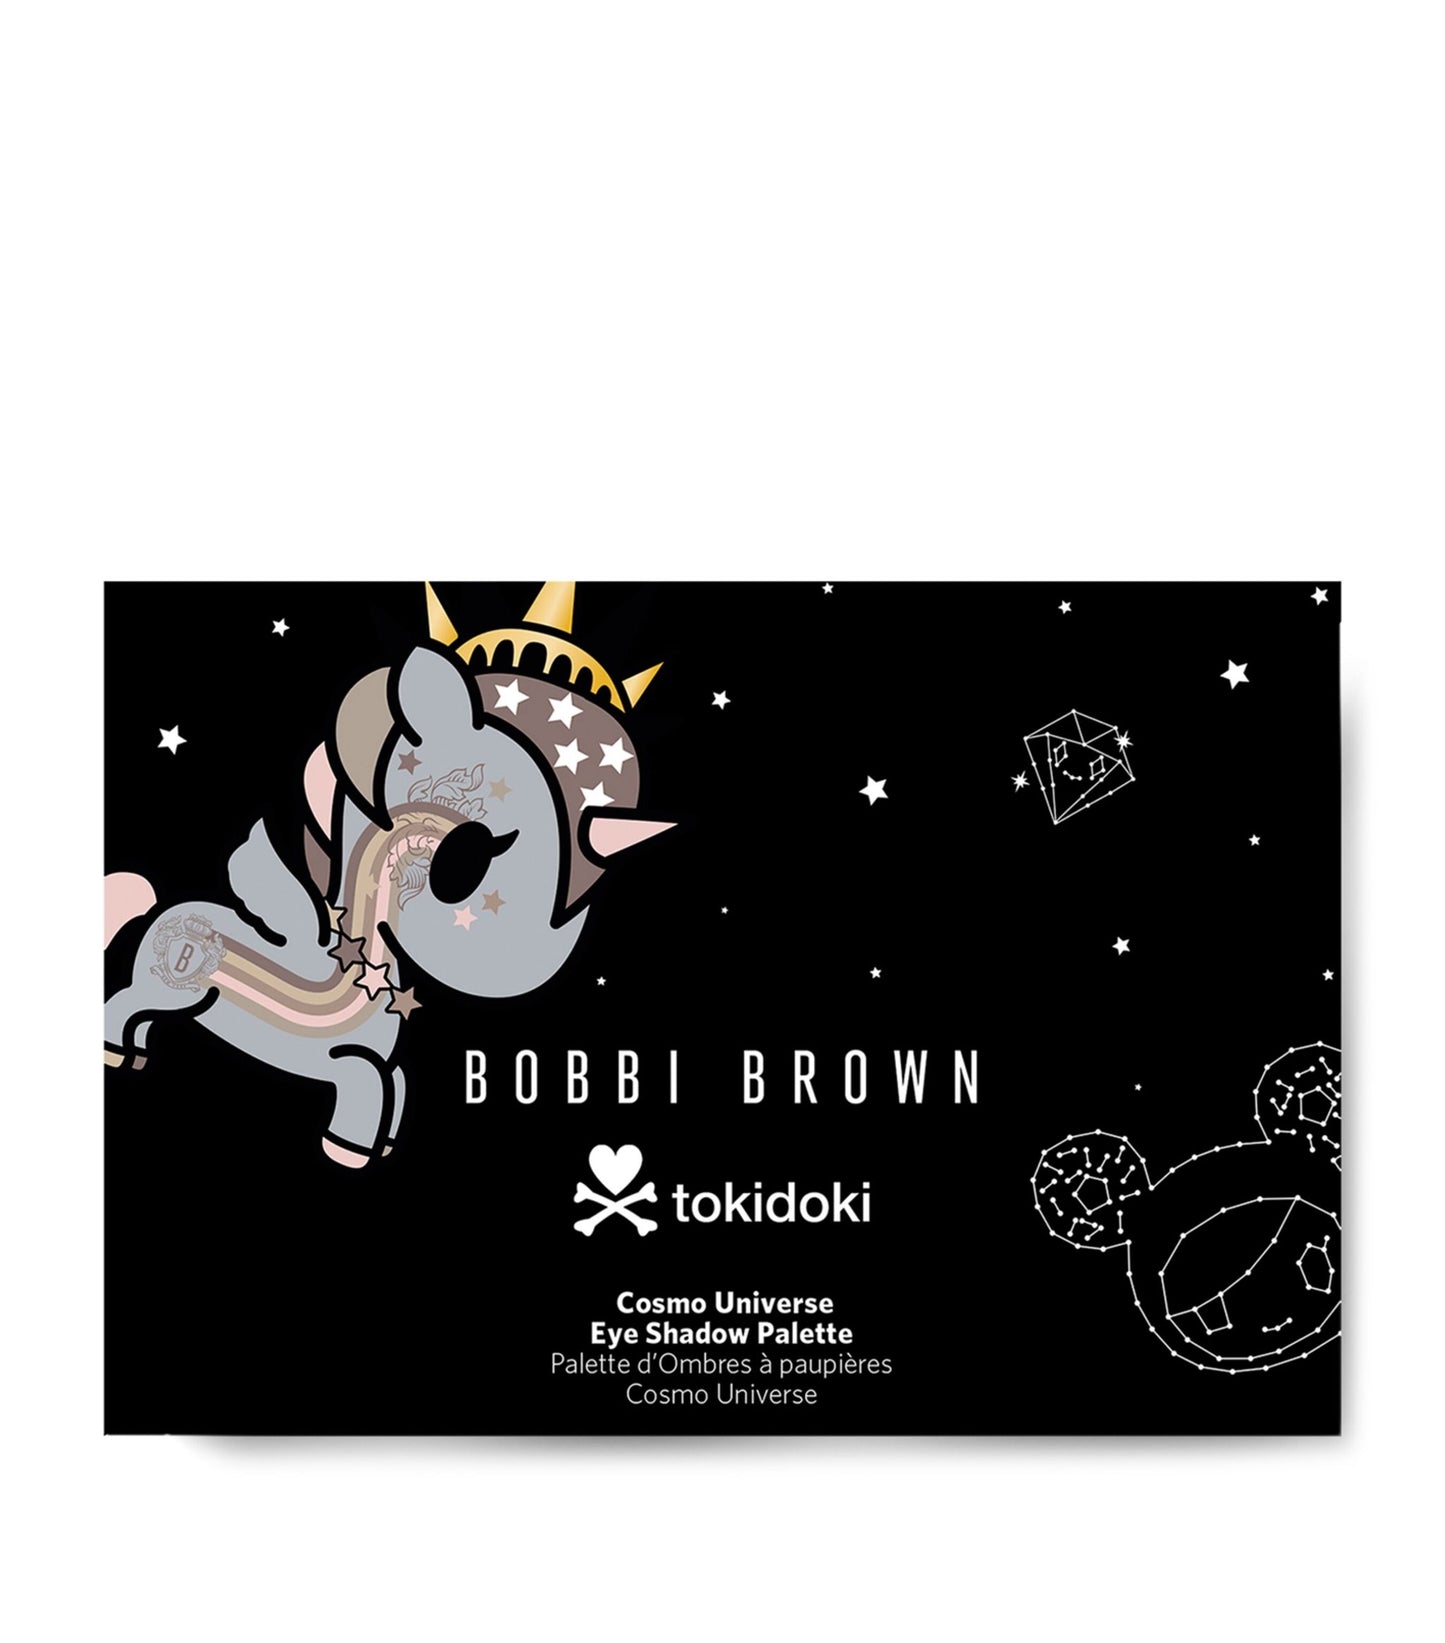 BOBBI BROWN x tokidoki Cosmo Universe Eye Shadow Palette